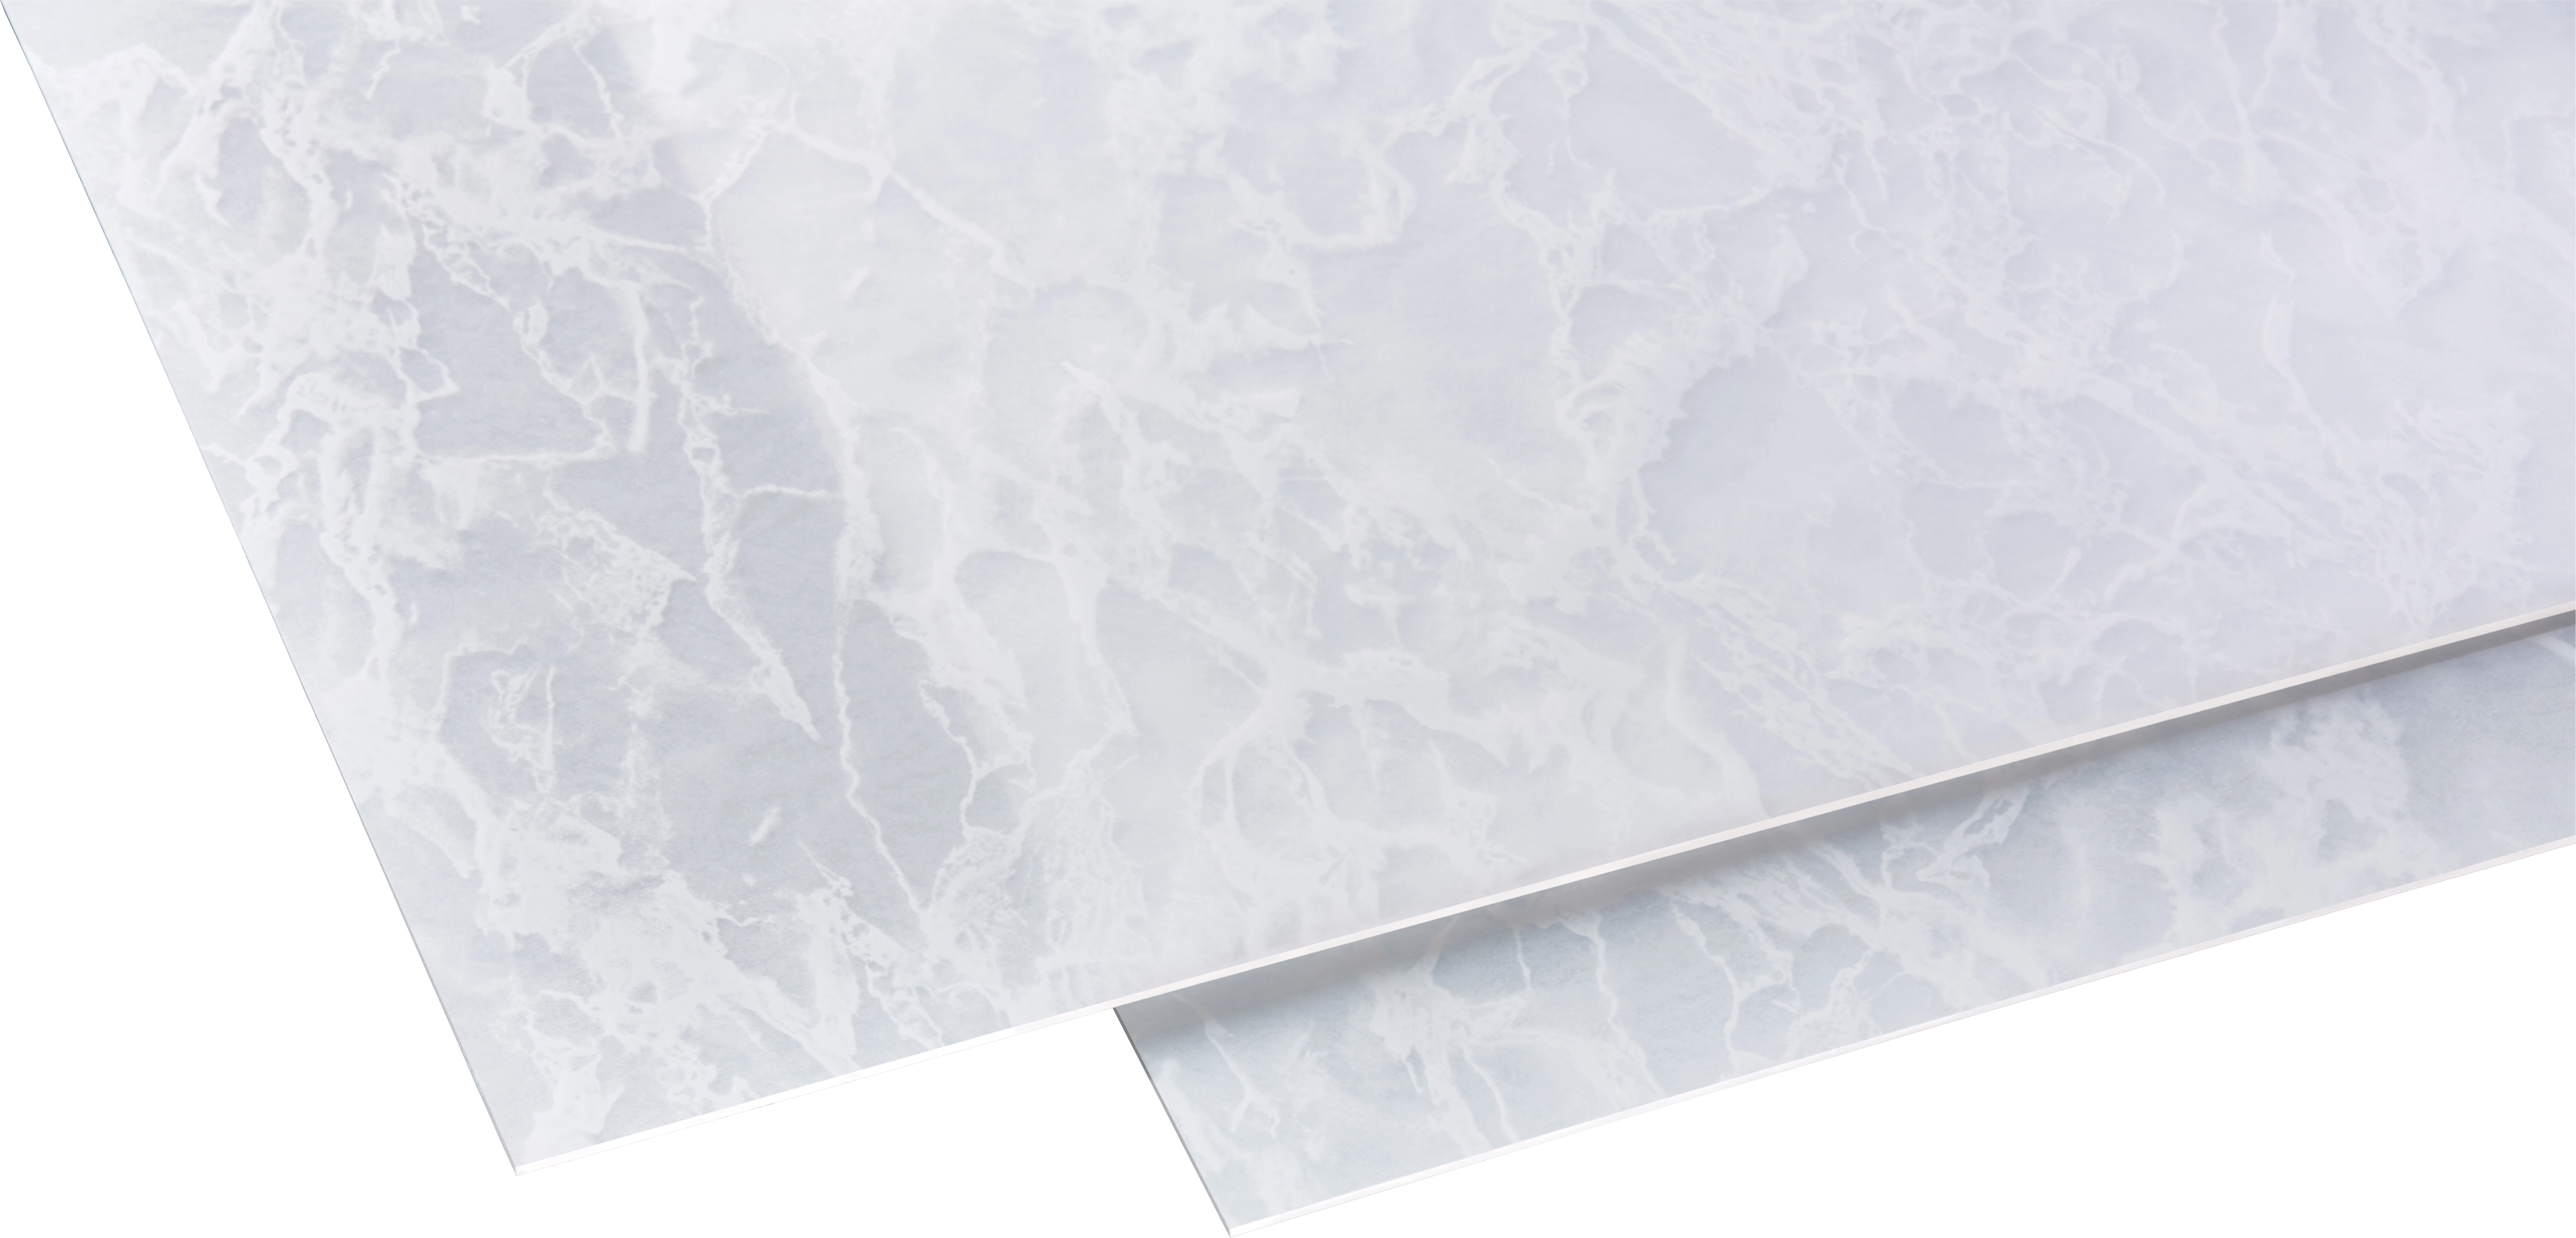 Polystyrol-Platte 2,5 mm Marmor weiß 1000 mm x 1000 mm kaufen